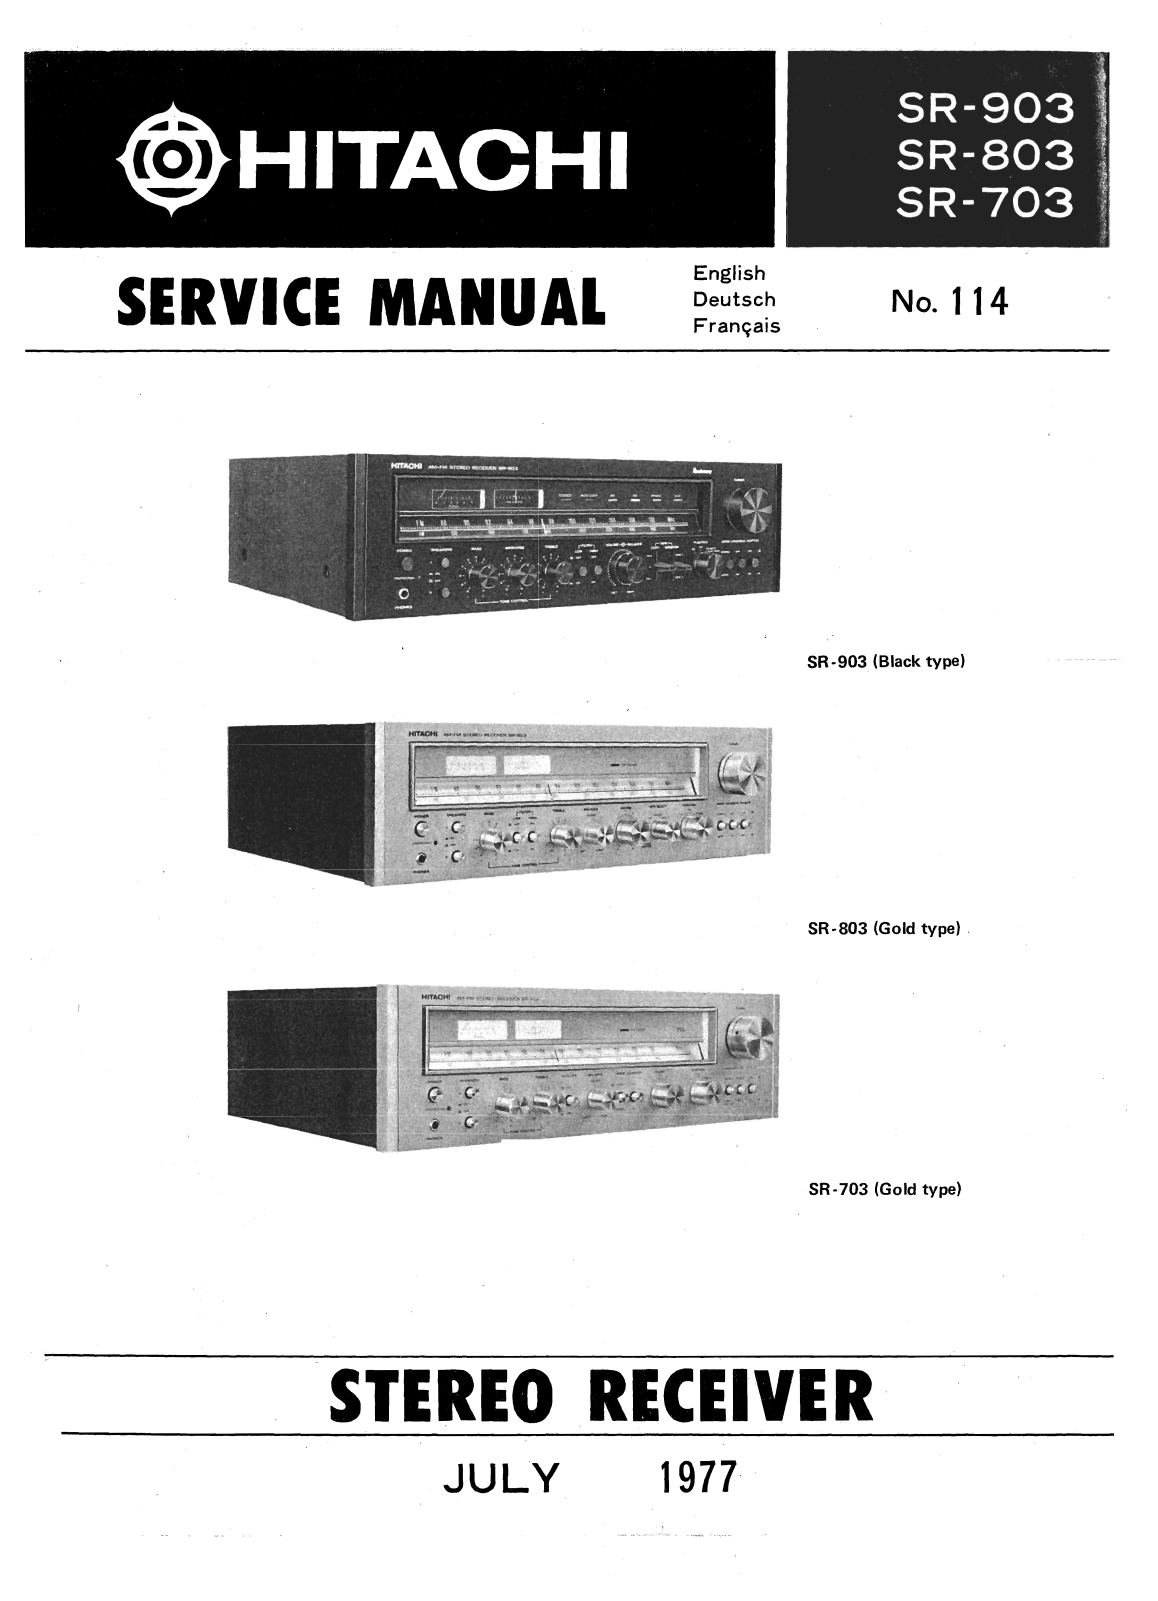 Hitachi SR-903, SR-803, SR-703 Service Manual